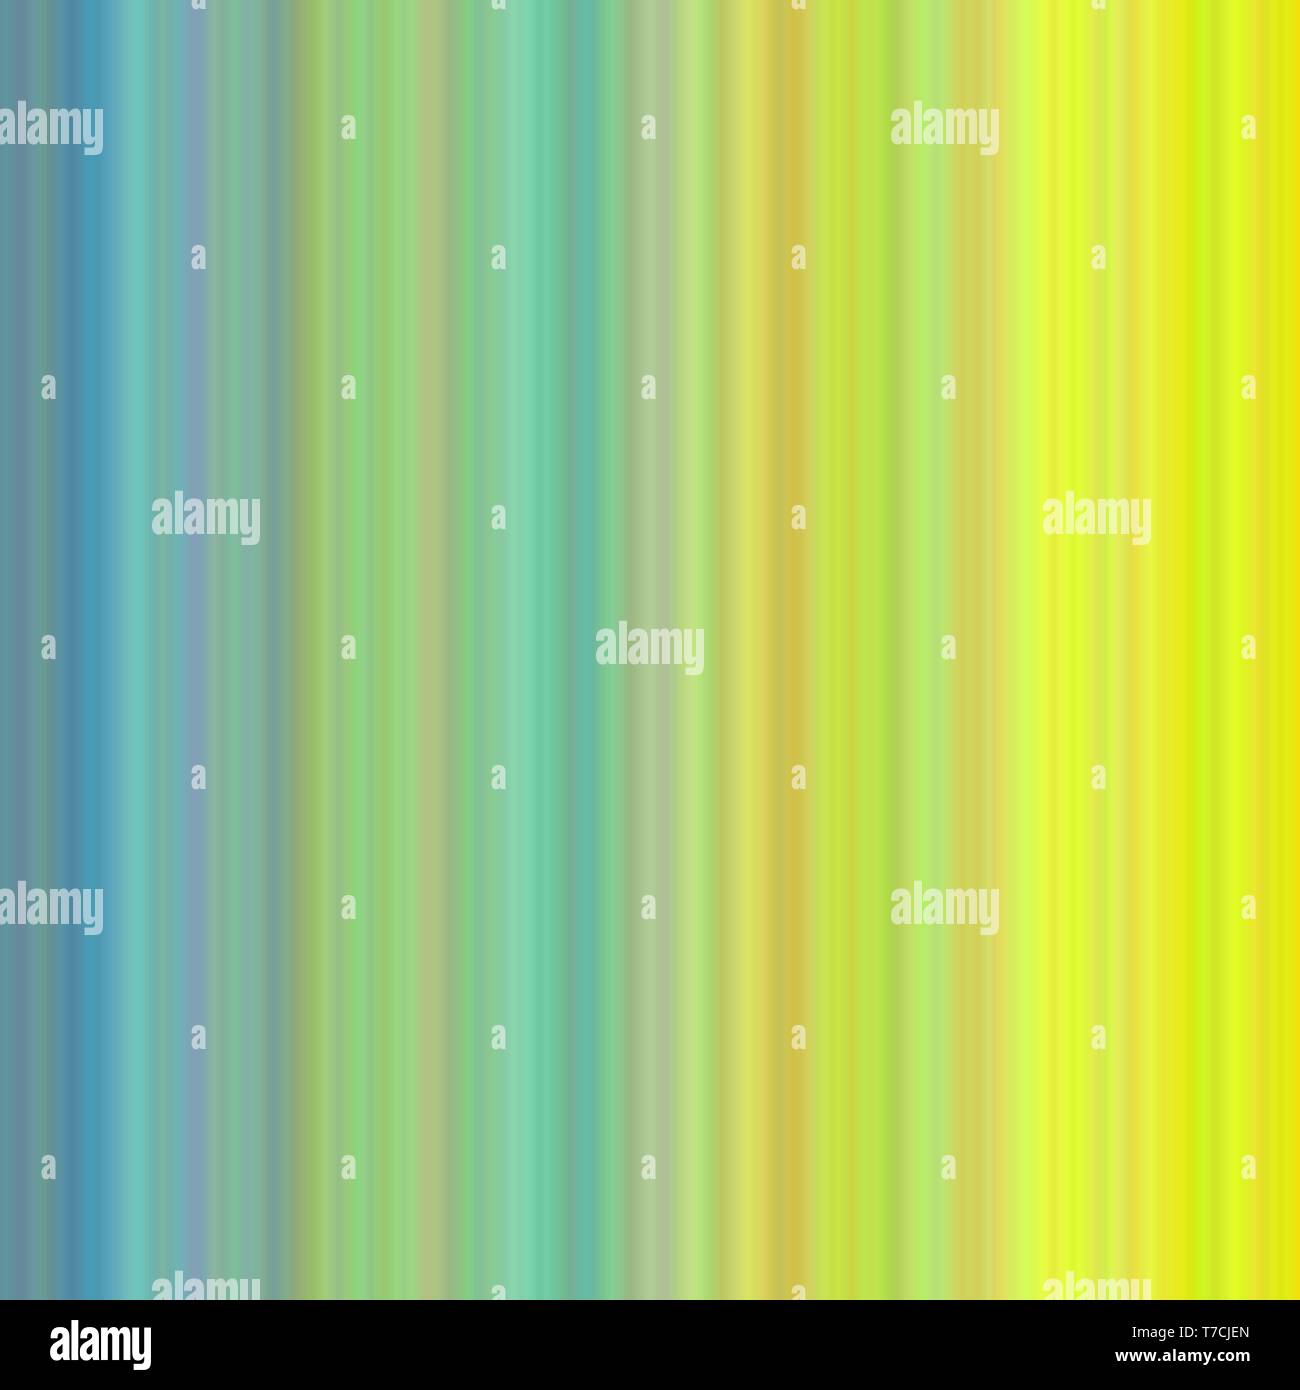 Light colored vertical gradient background design Stock Vector